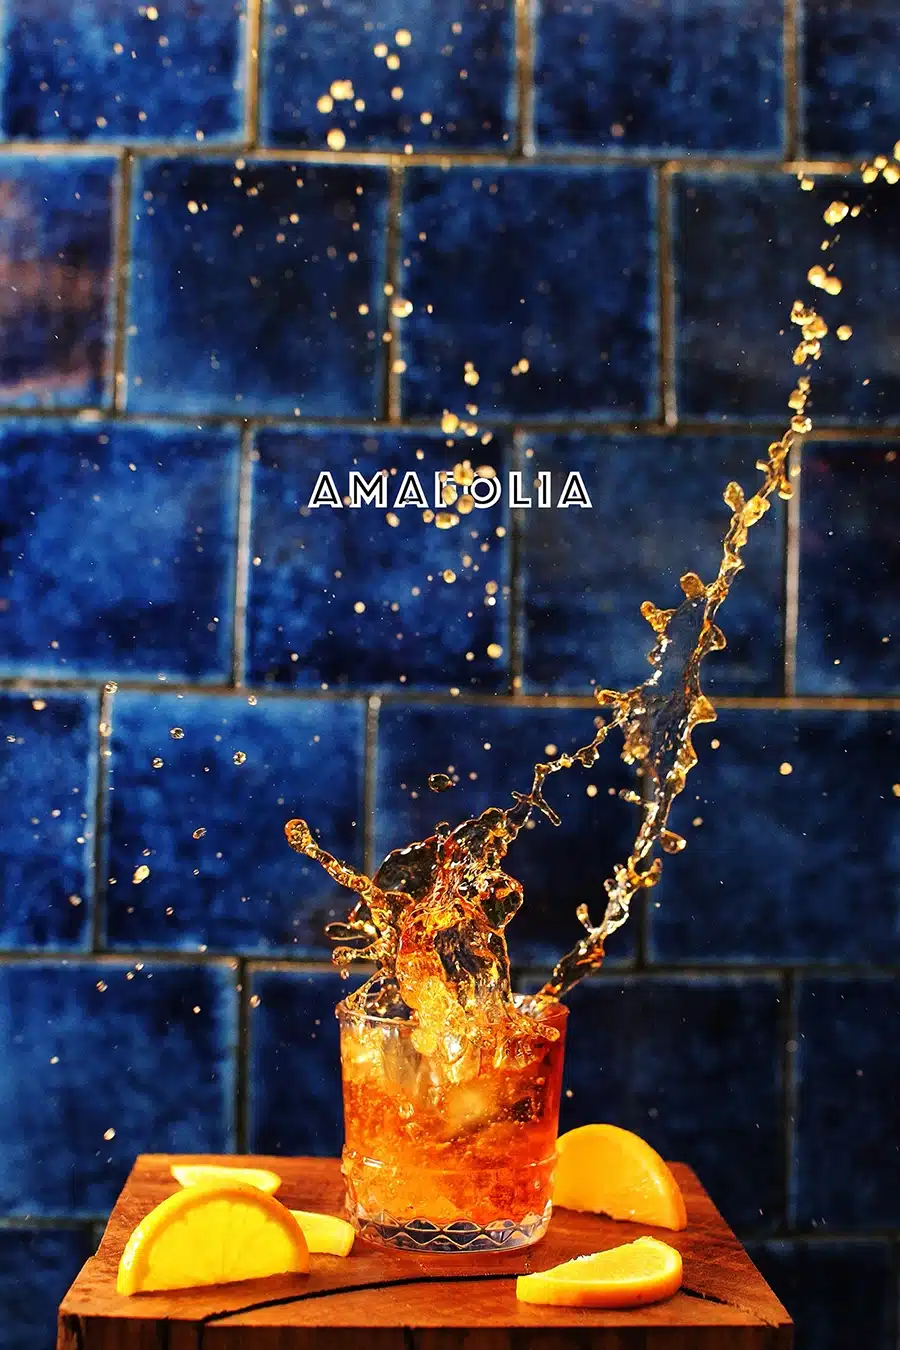 amafolia carte drinks cocktails